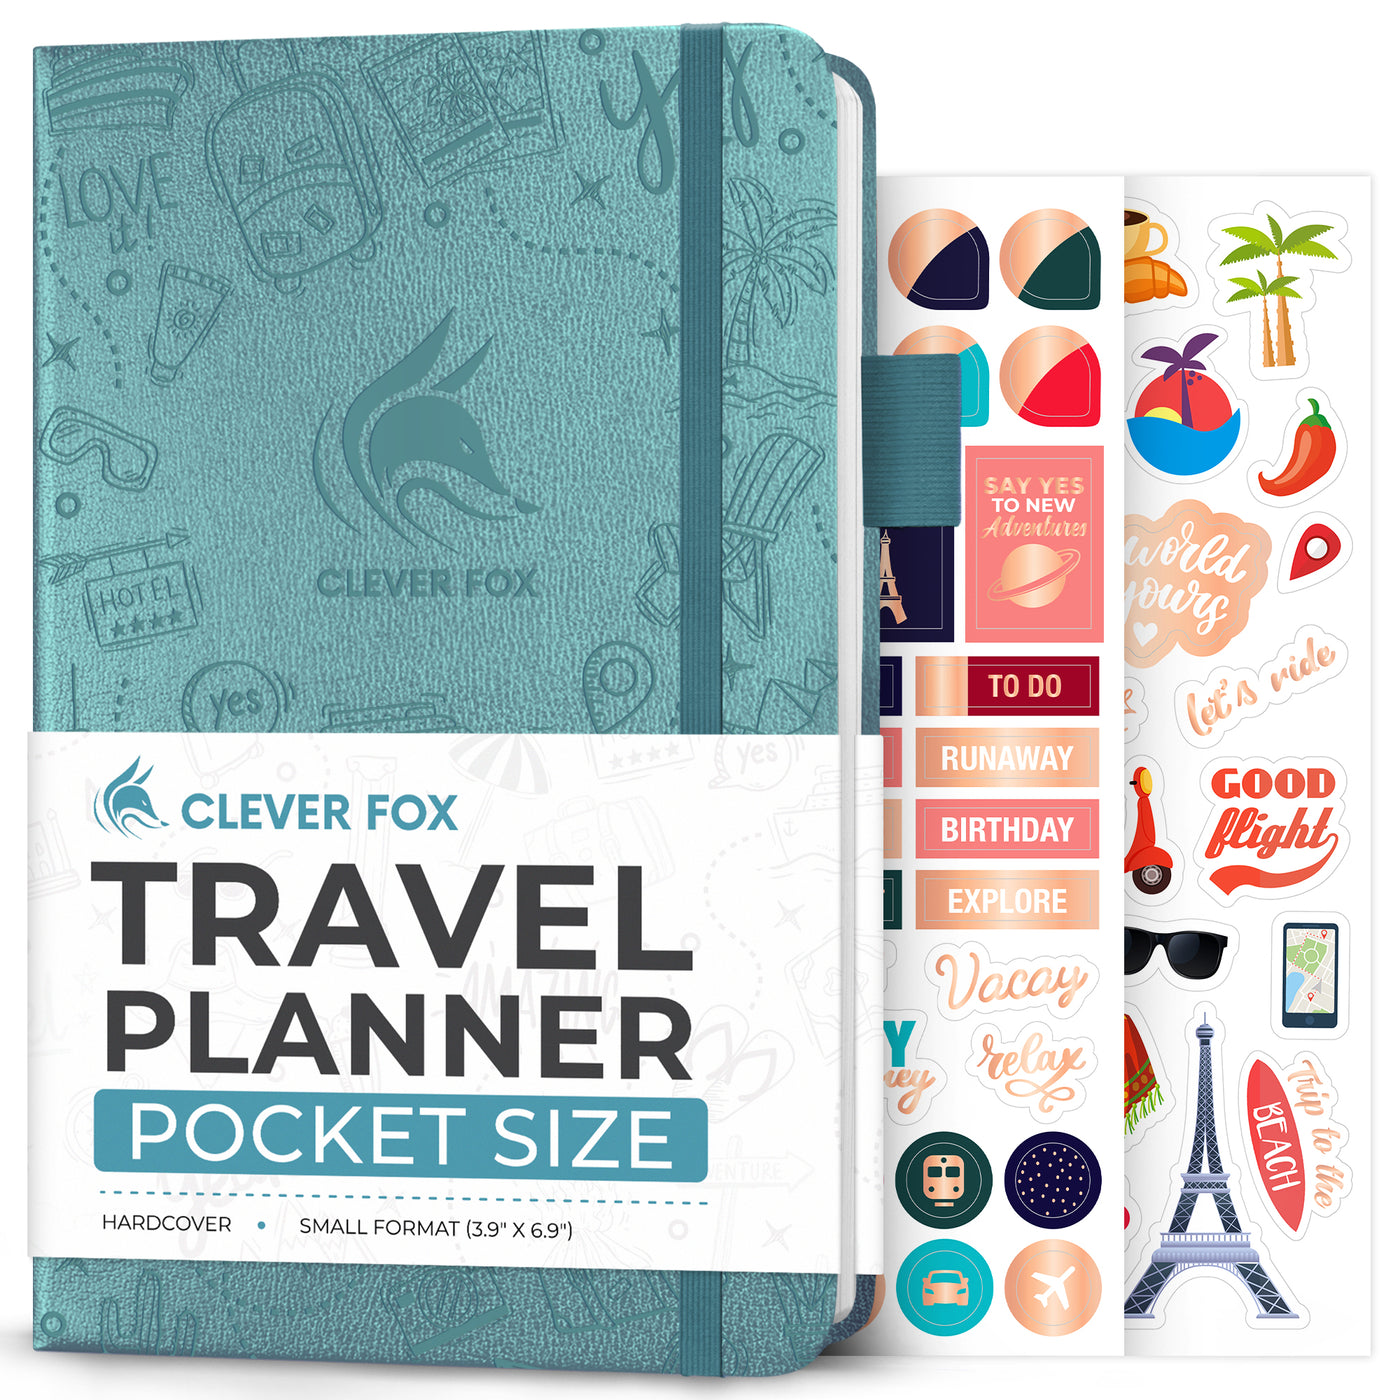 Travel - Birthday or Milestone Travel Birthday Planner Stickers